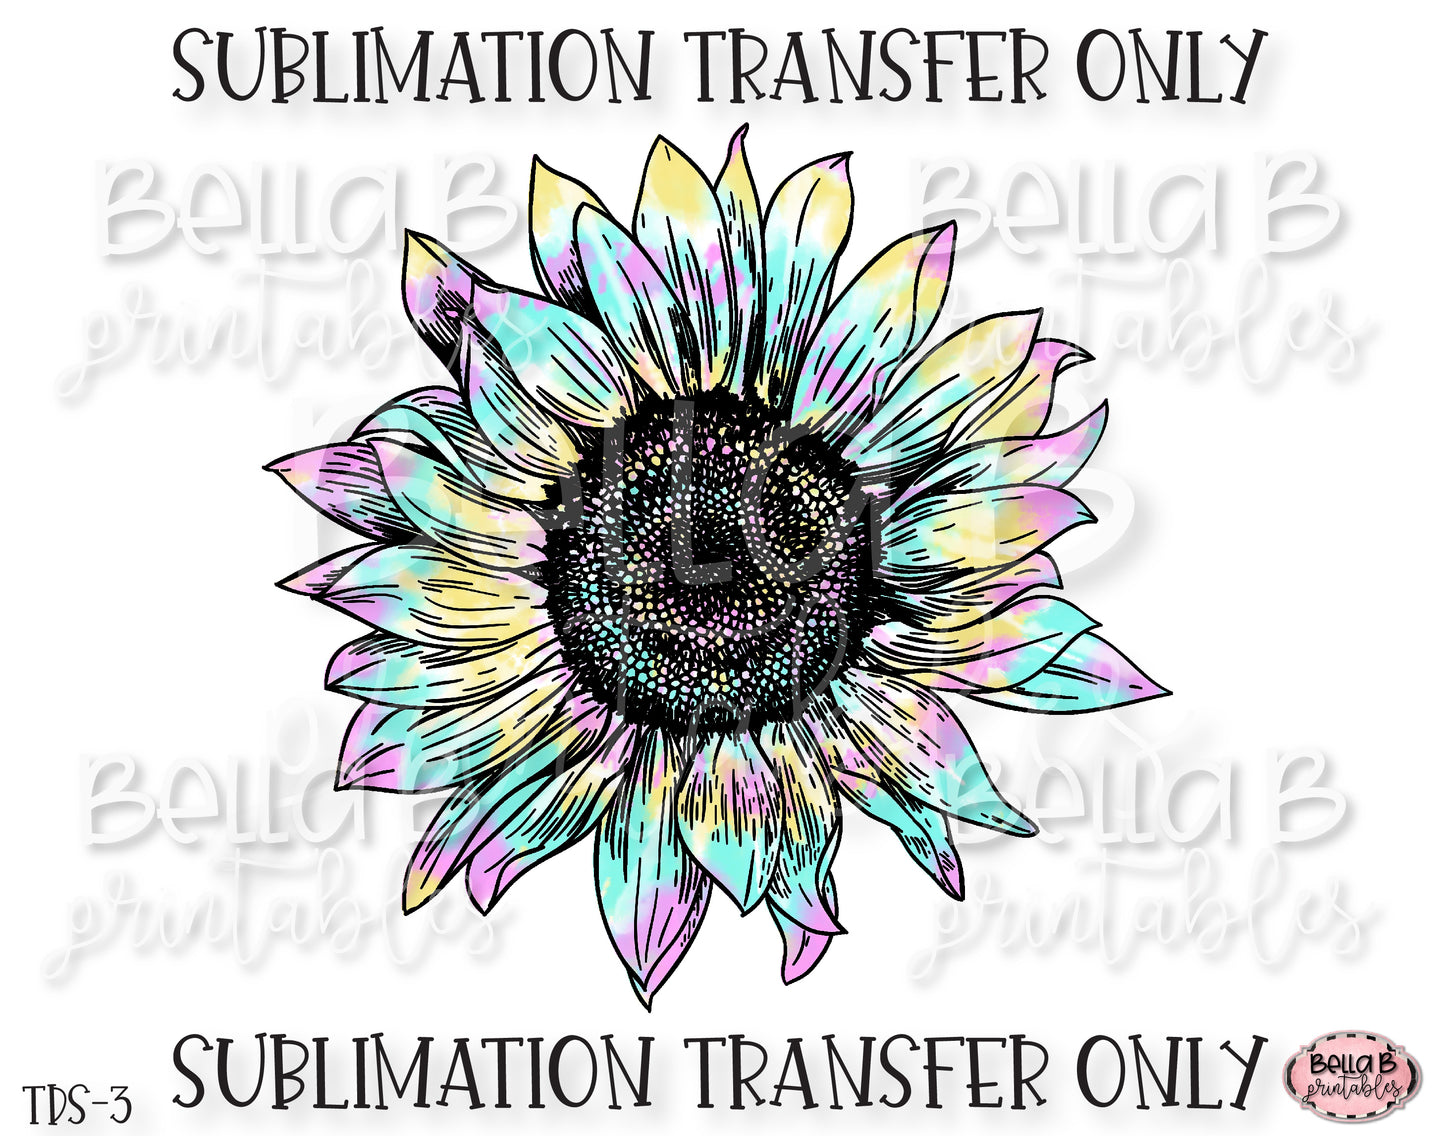 Tie Dye Sunflower Sublimation Transfer, Ready To Press, Heat Press Transfer, Sublimation Print